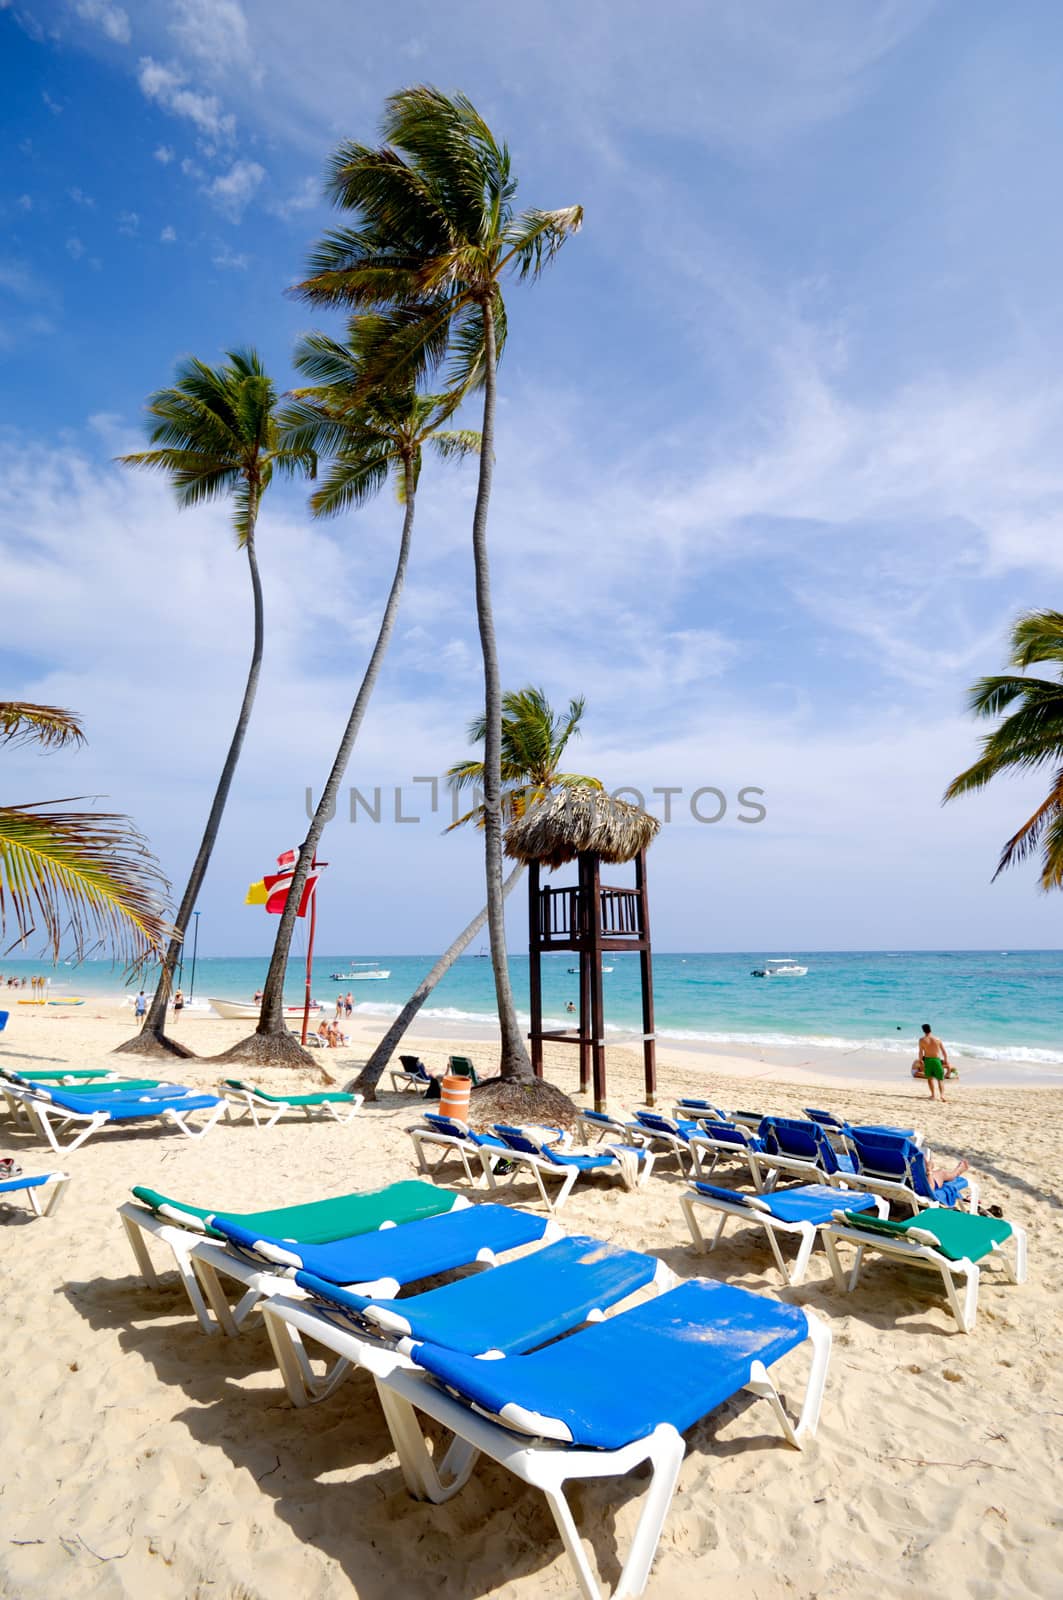 Beach at Saona Island, Dominican Republic by cfoto